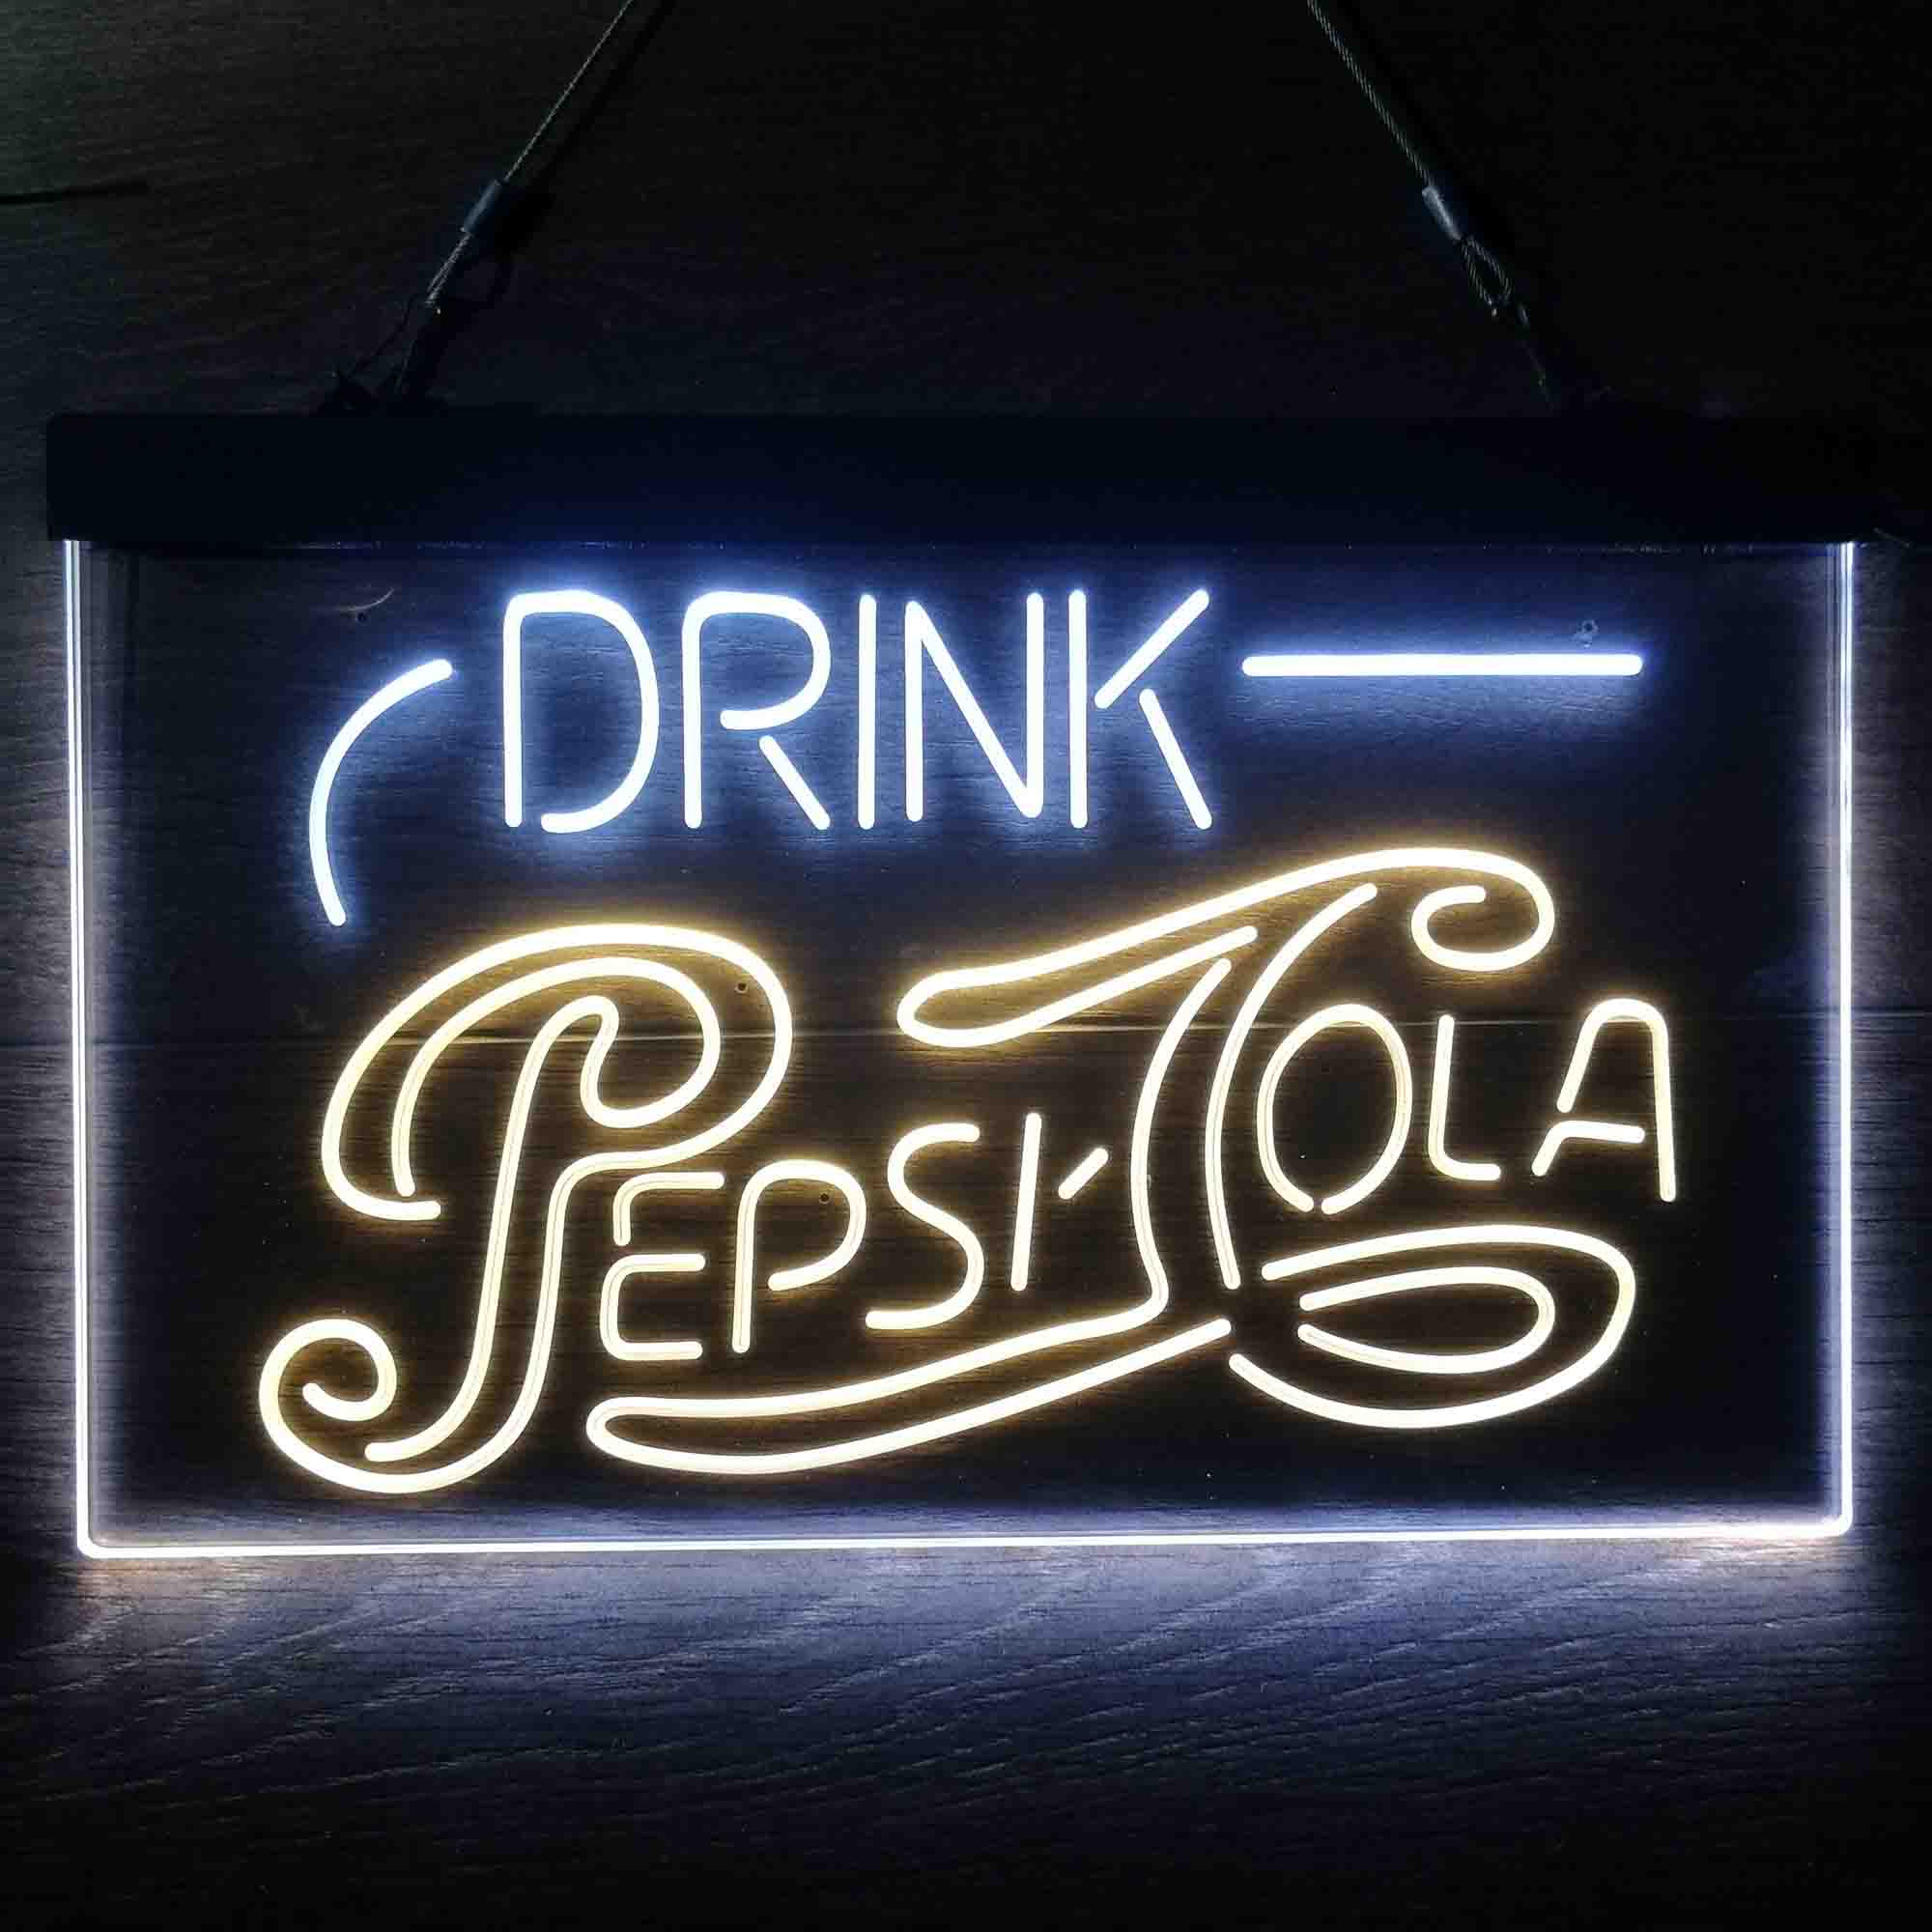 Drink Pepsi Cola Gift Beer Bar Neon-Like LED Sign